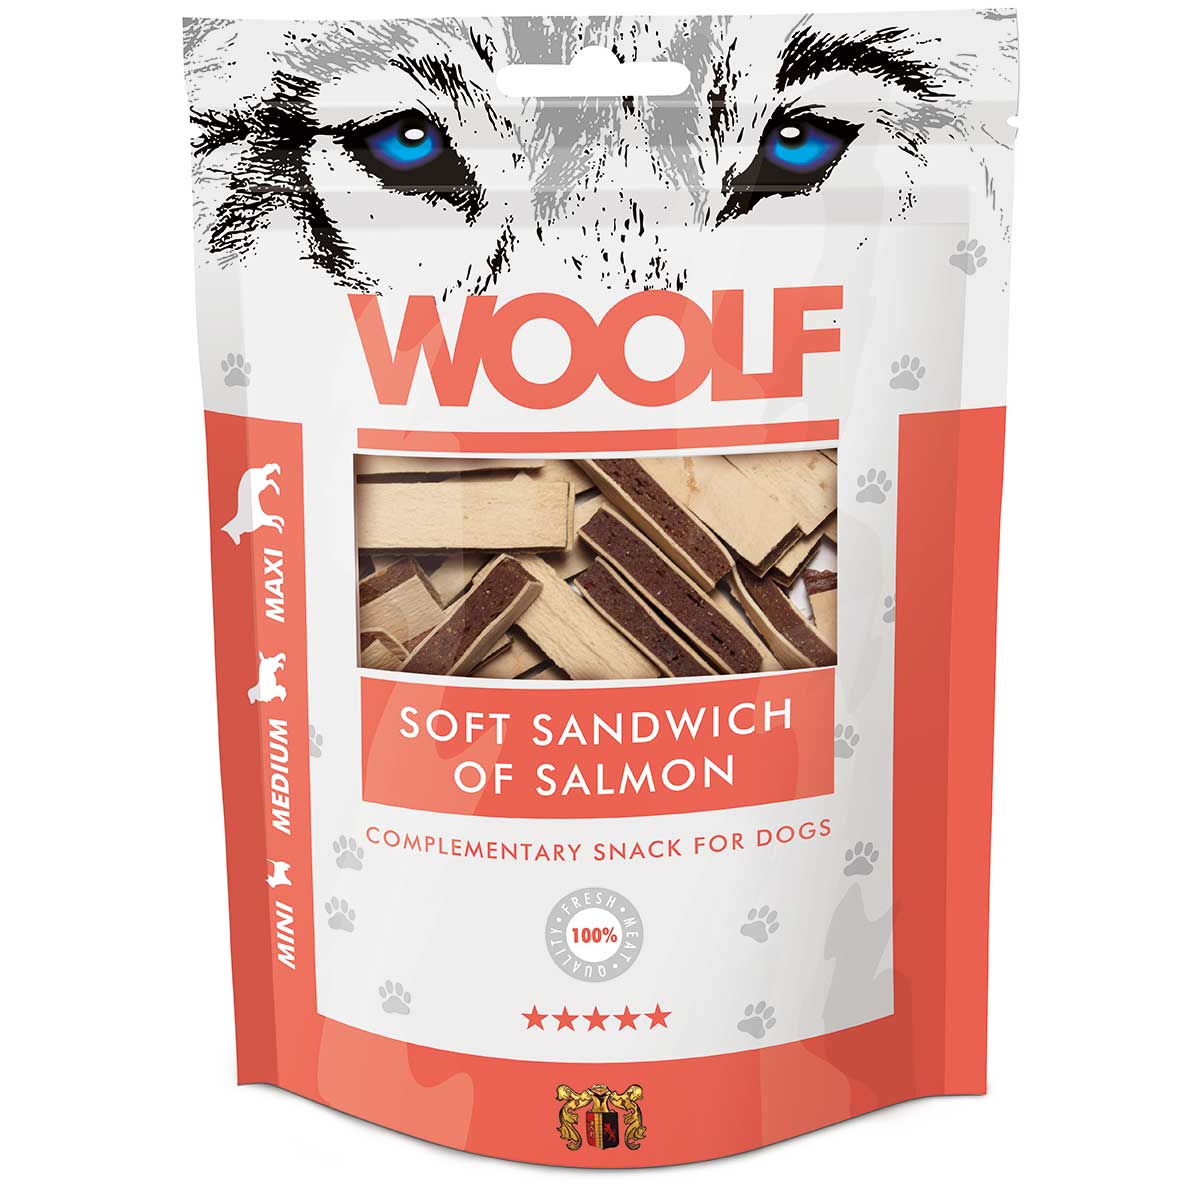 Woolf Dog treat soft sandwich with salmon